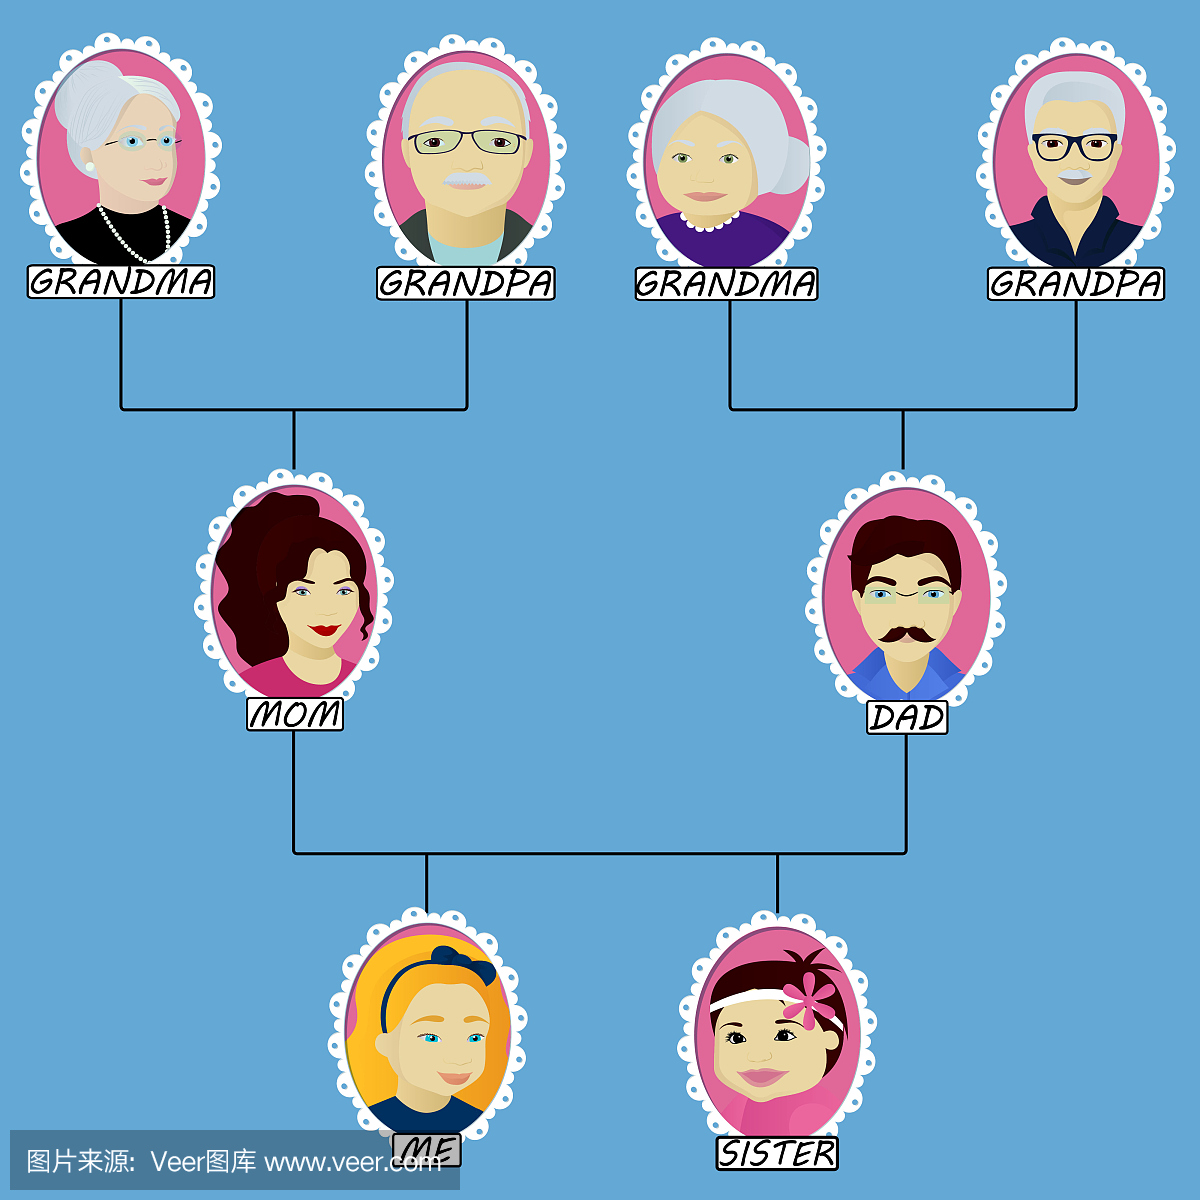 familytree的图怎么画_familytree图片_微信公众号文章